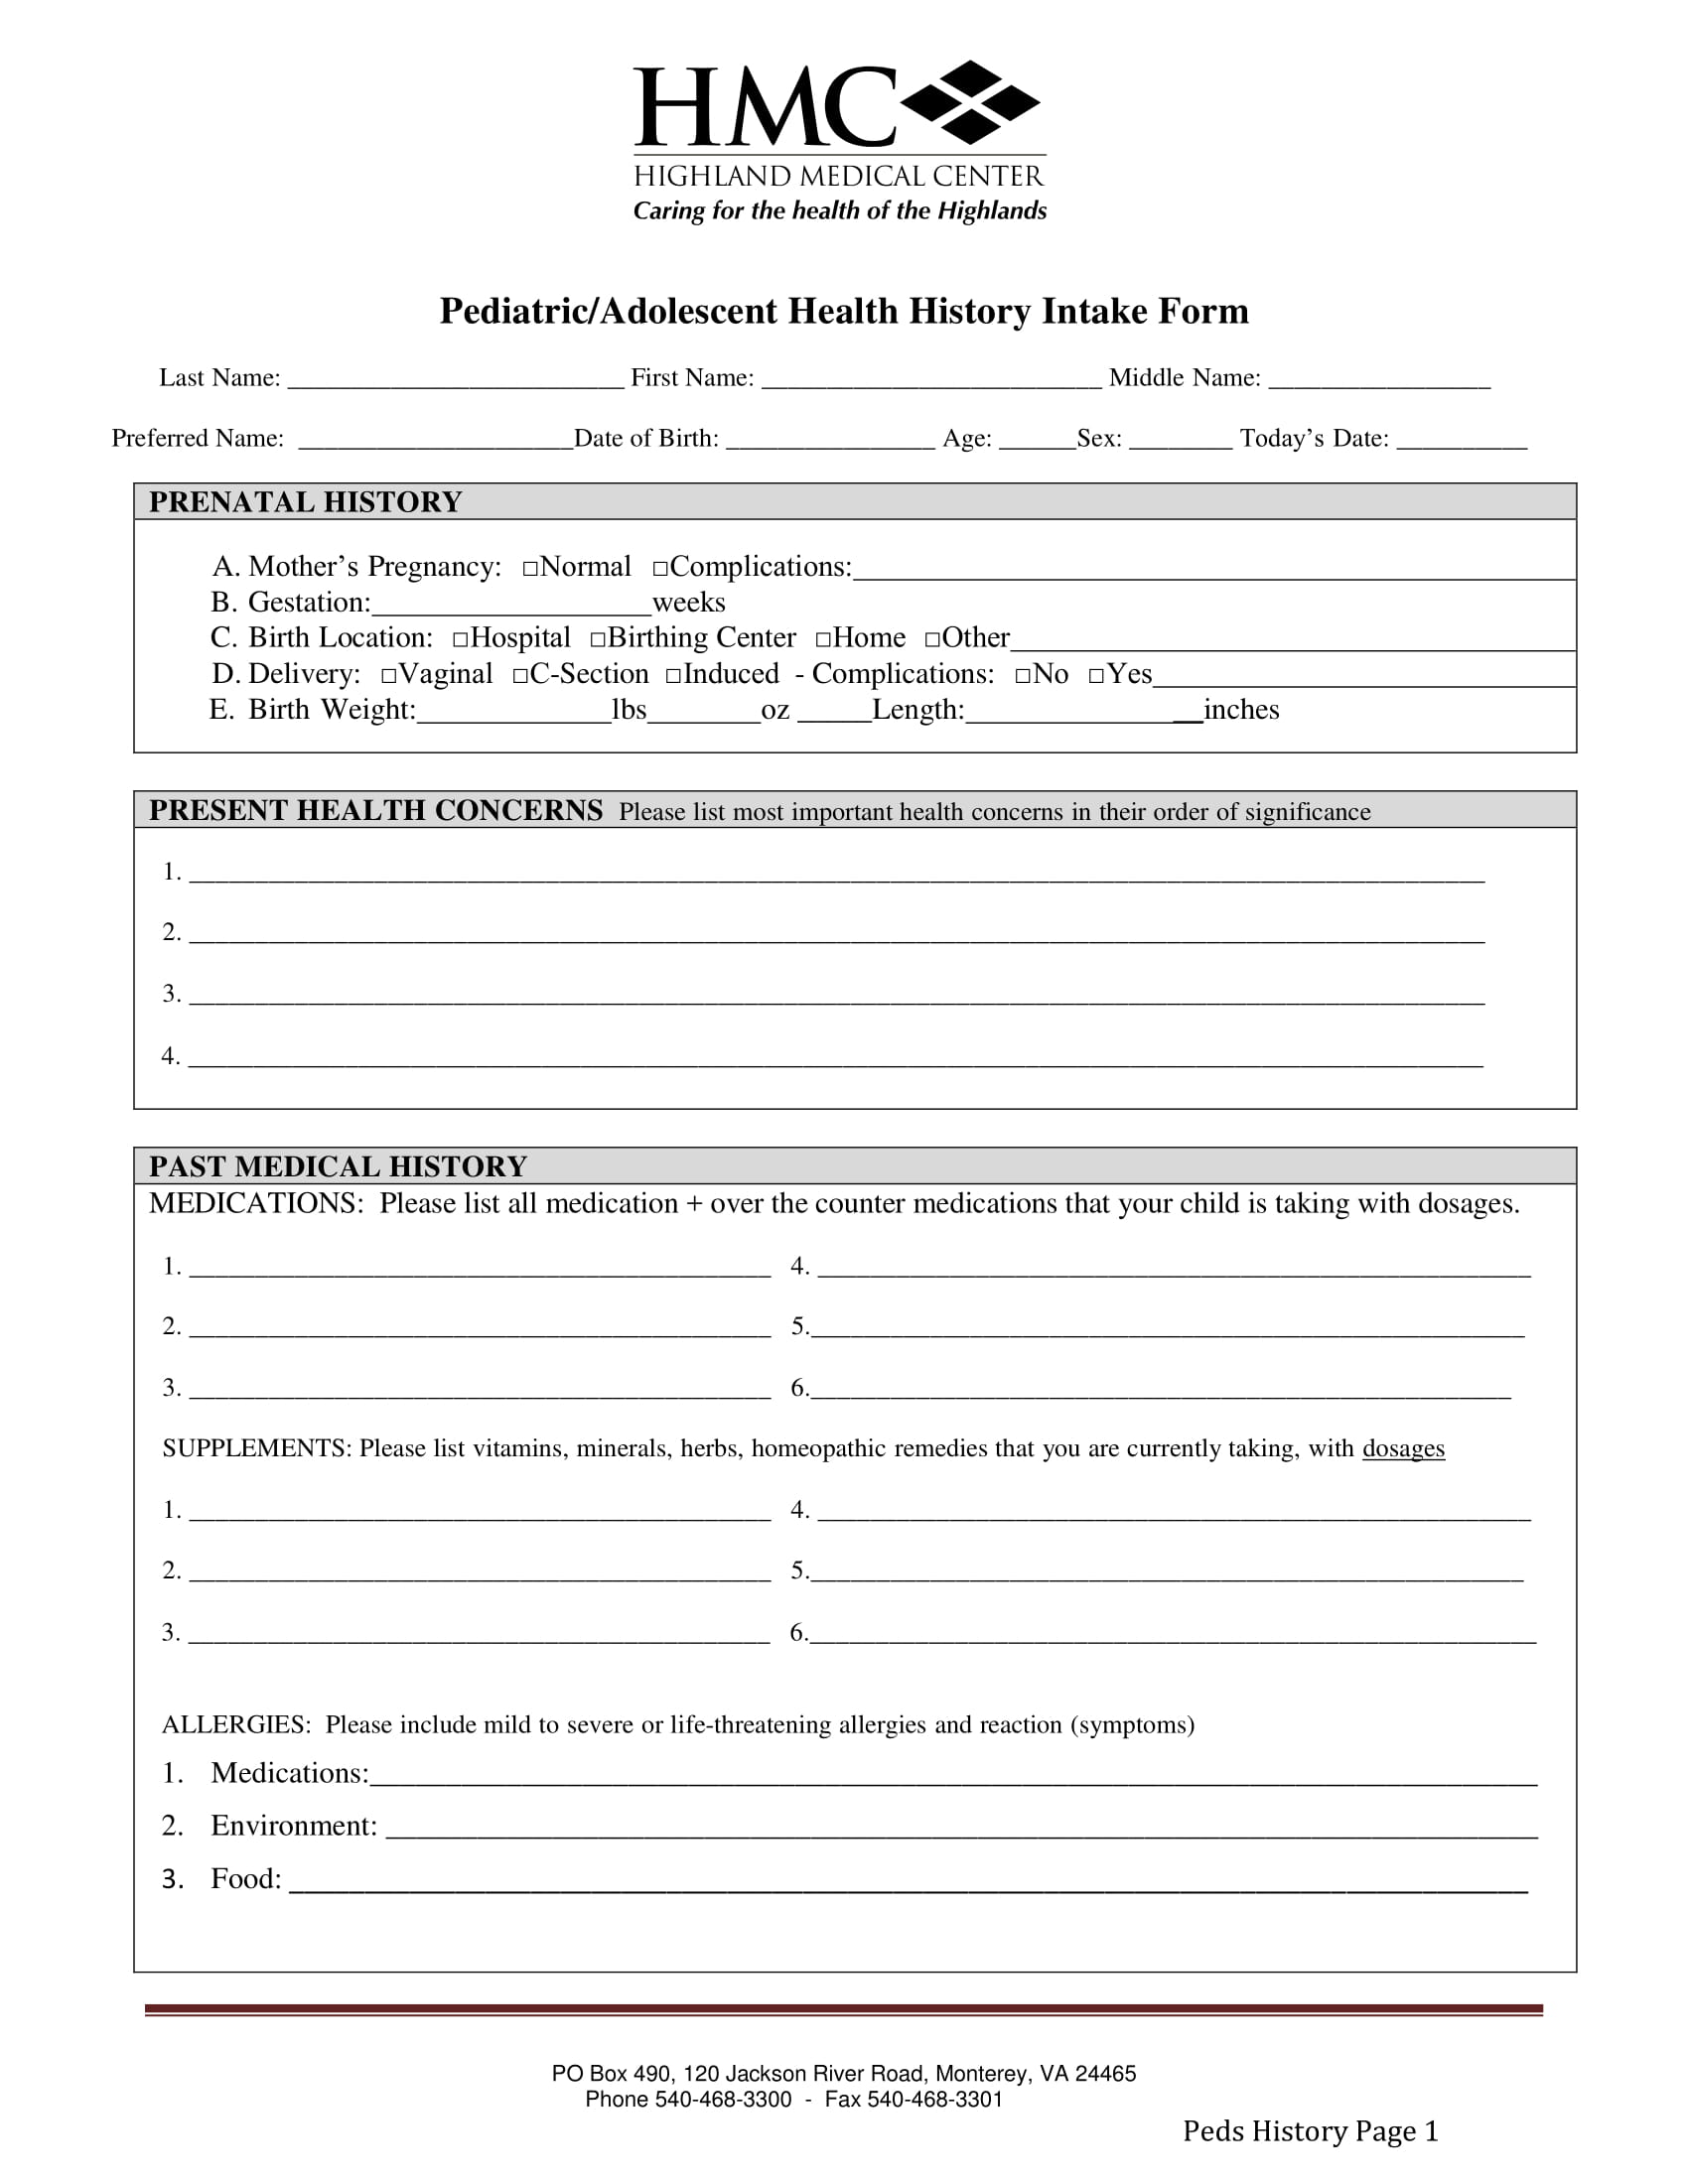 pediatric health history intake form 1